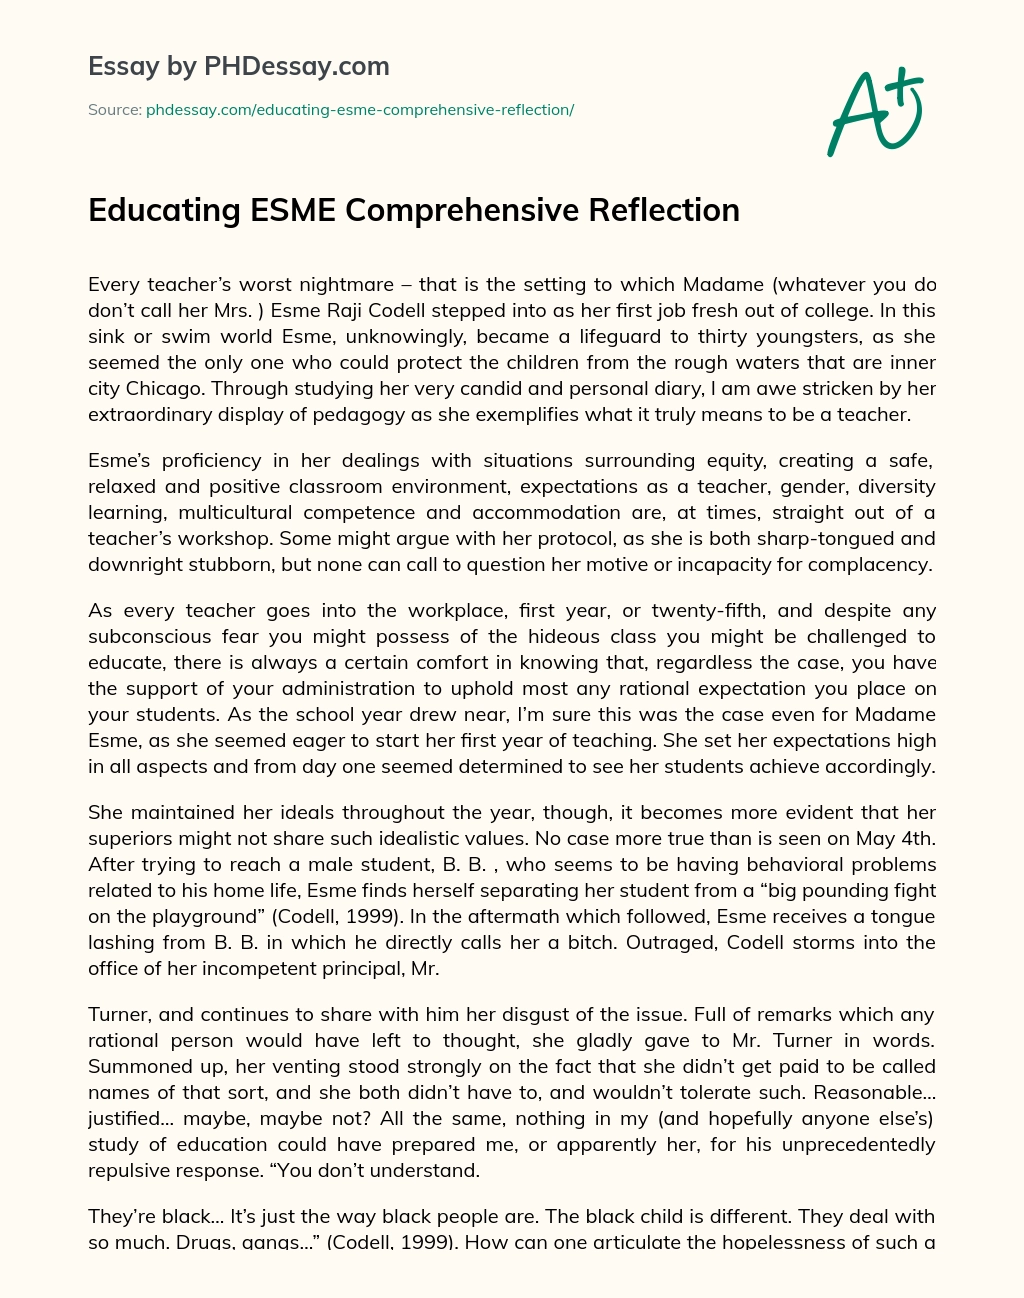 Educating ESME Comprehensive Reflection essay